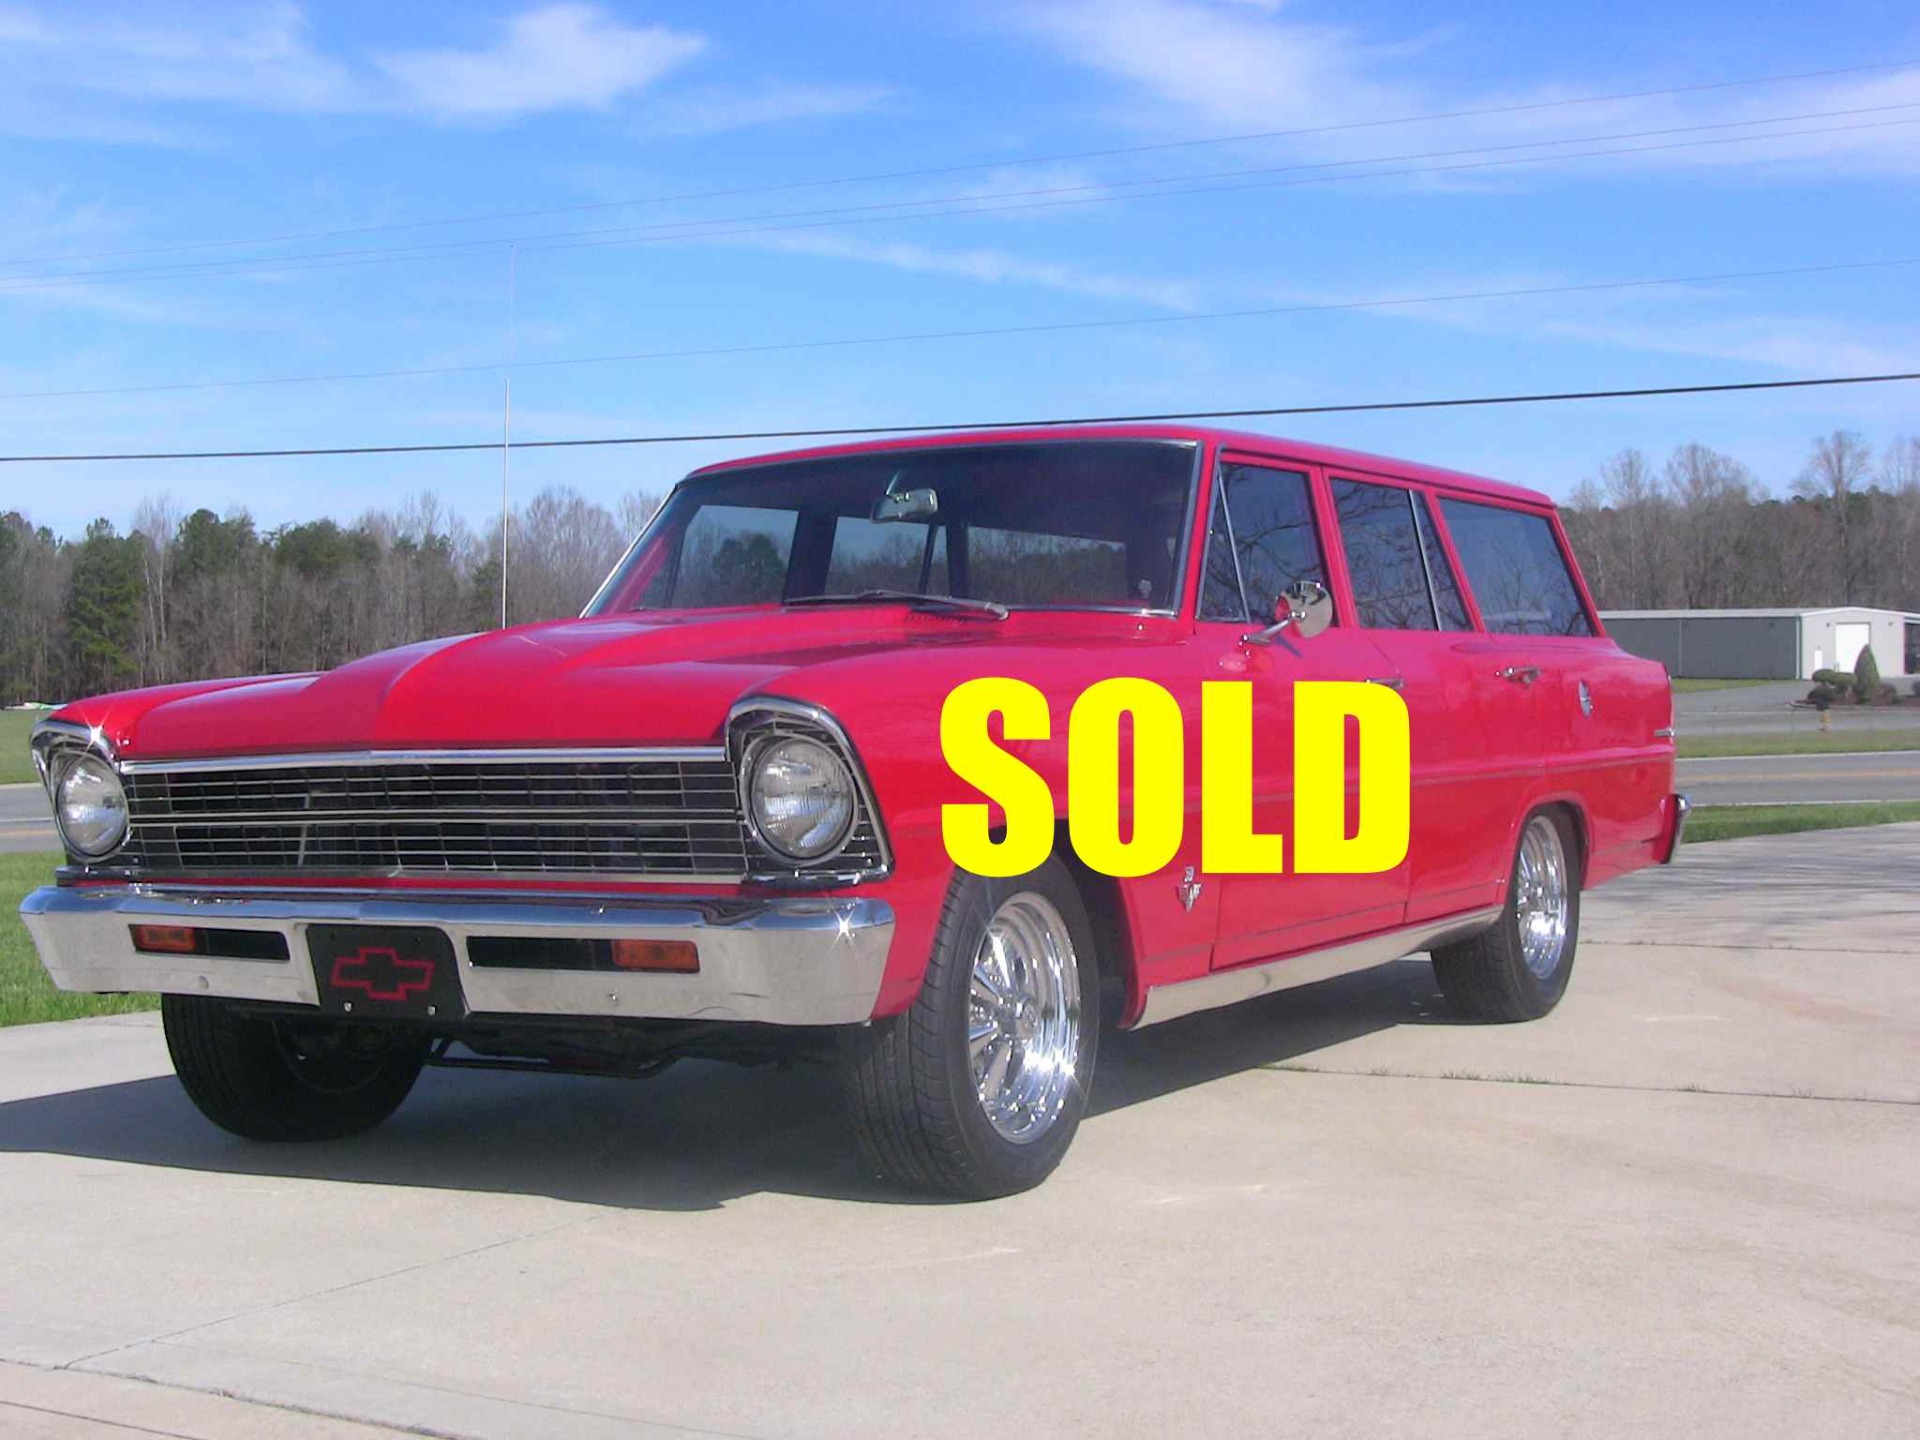 Used 1967 Chevrolet Chevy II Nova Station Wagon 107 , For Sale $34900, Call Us: (704) 996-3735